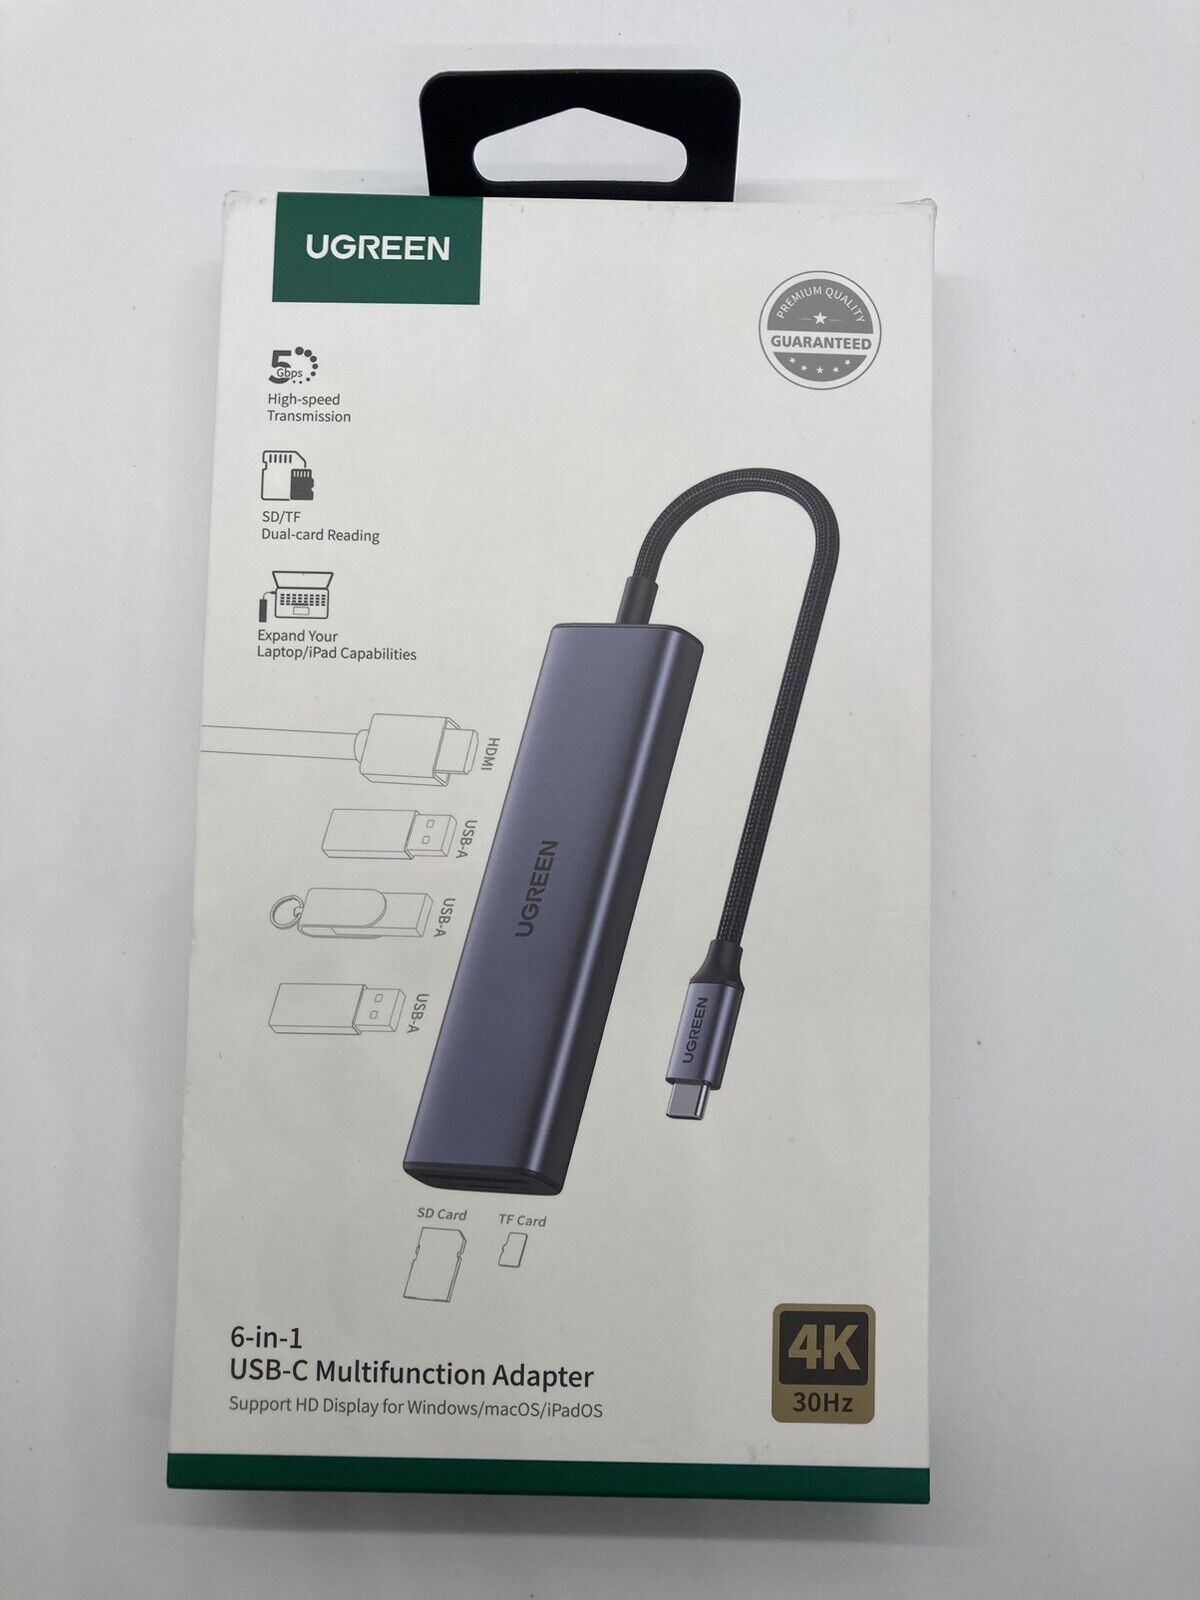 UGreen 6-in-1 USB-C Hub 4K HDMI, 3 USB 3.0 Ports, SD/TF Card Reader for Mac, etc